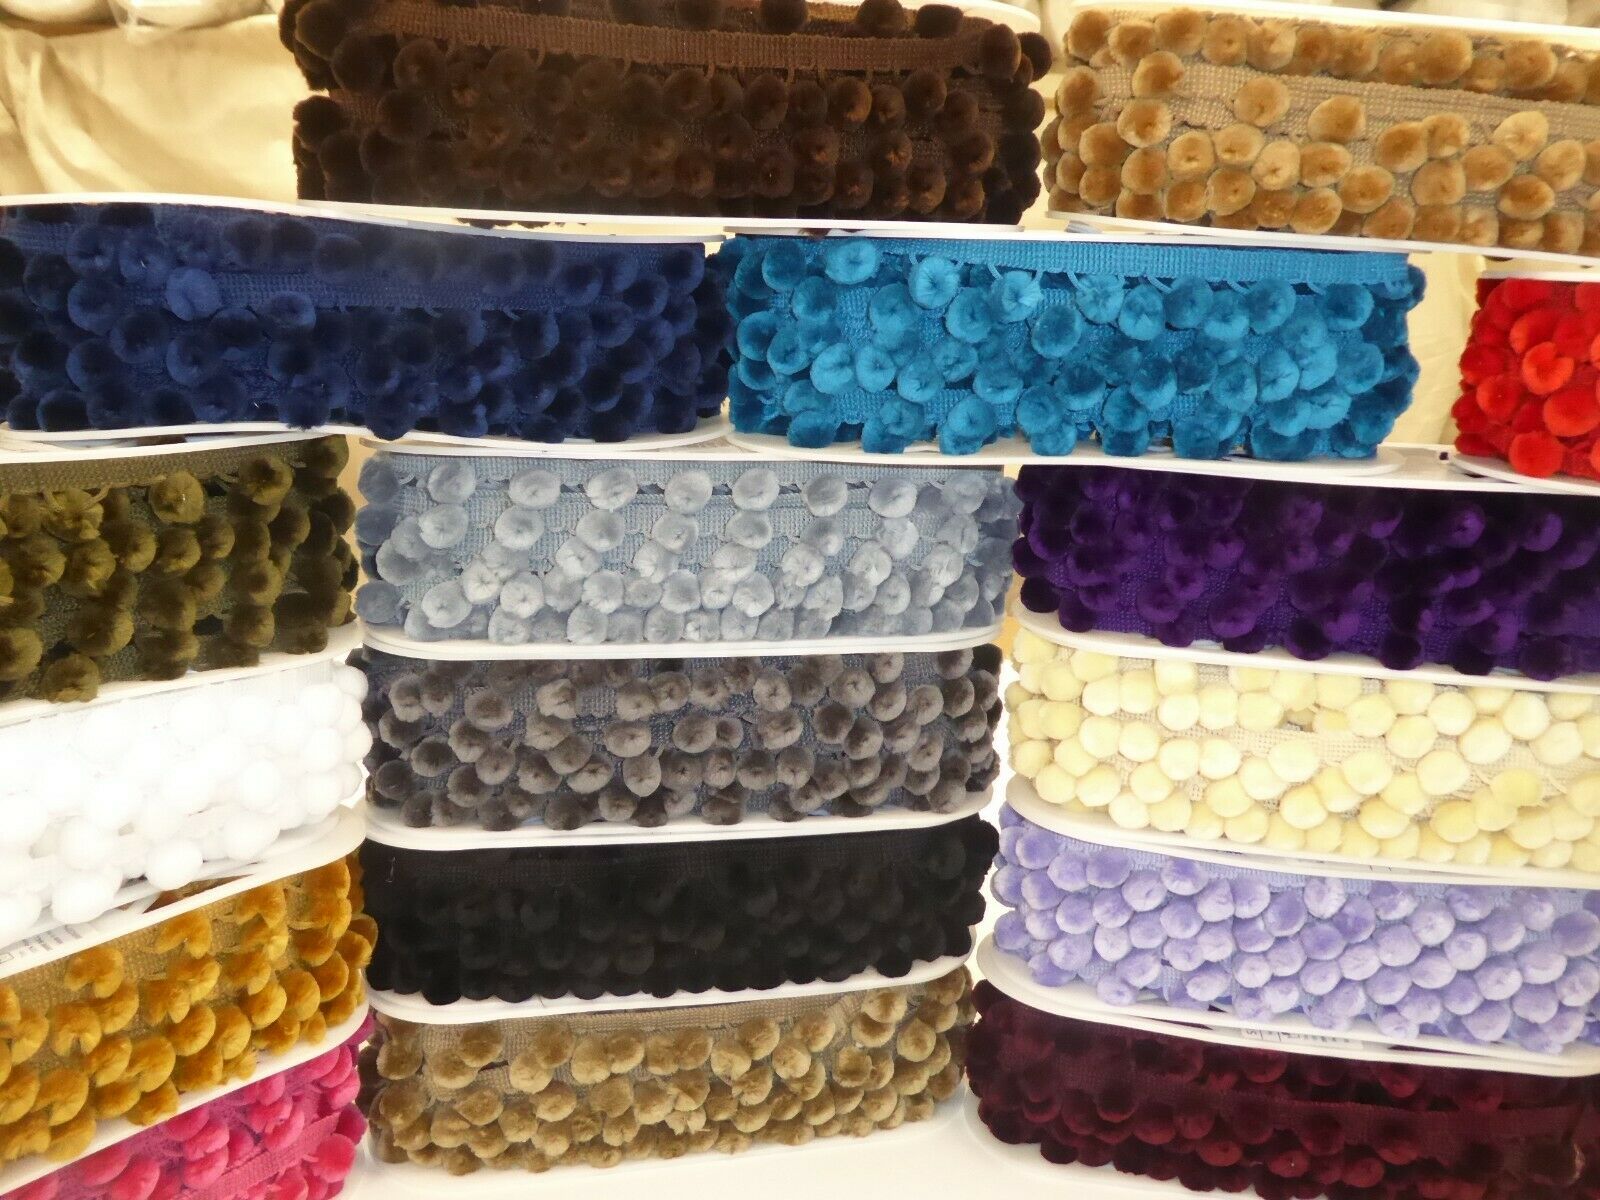 Rainbow pom pom trim handcrafted fringe fabric lace sewing border trim new  for craft 10 yards